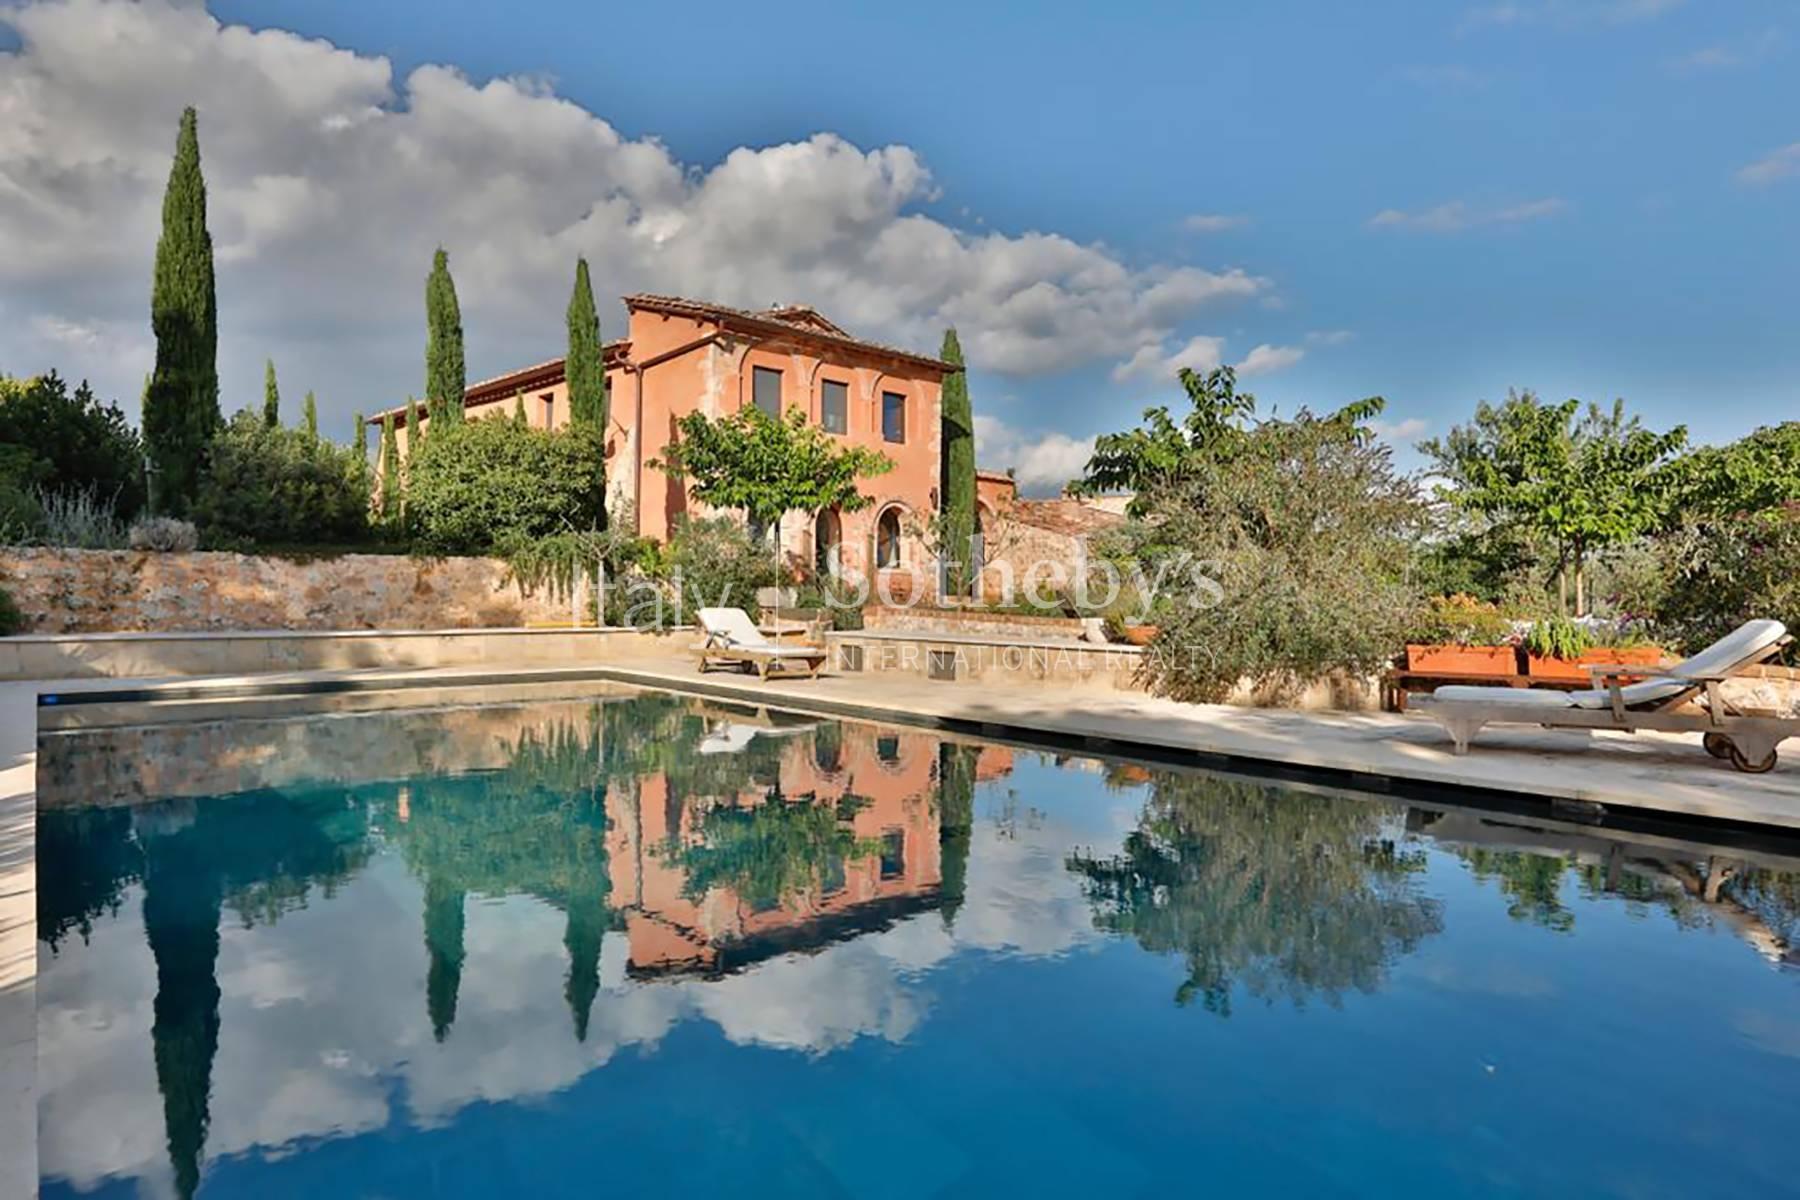 Luxurious 6 bedroom villa with pool near Siena - 3